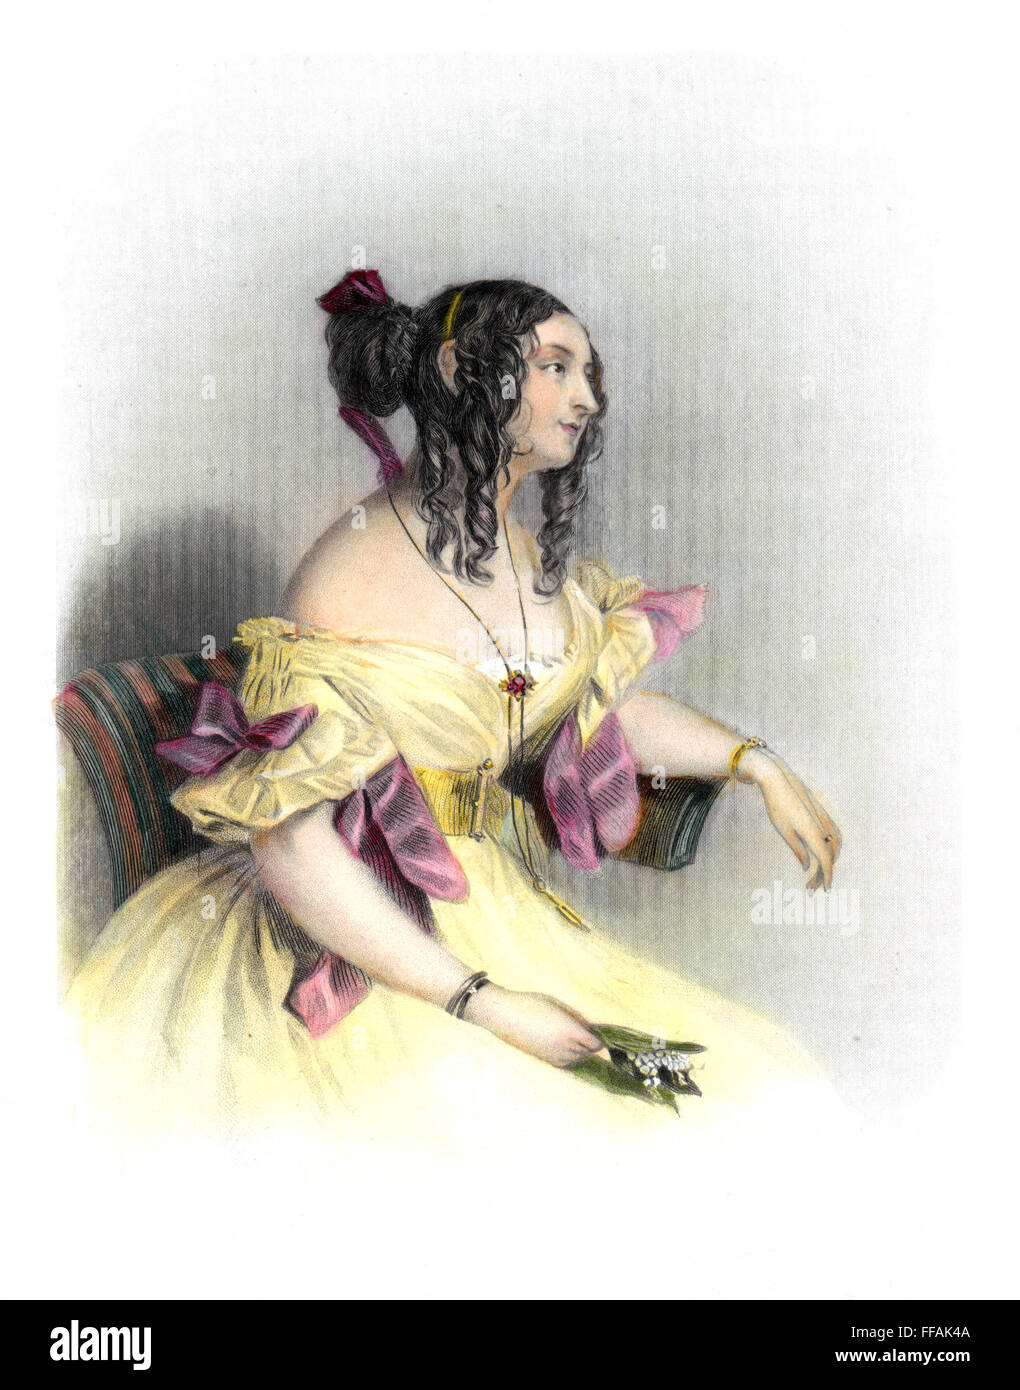 COUNTESS TERESA GUICCIOLI /n(1801?-1873). Italian noblewoman and mistress of George Gordon Byron, Lord Byron. Stipple engraving, English, 19th century. Stock Photo